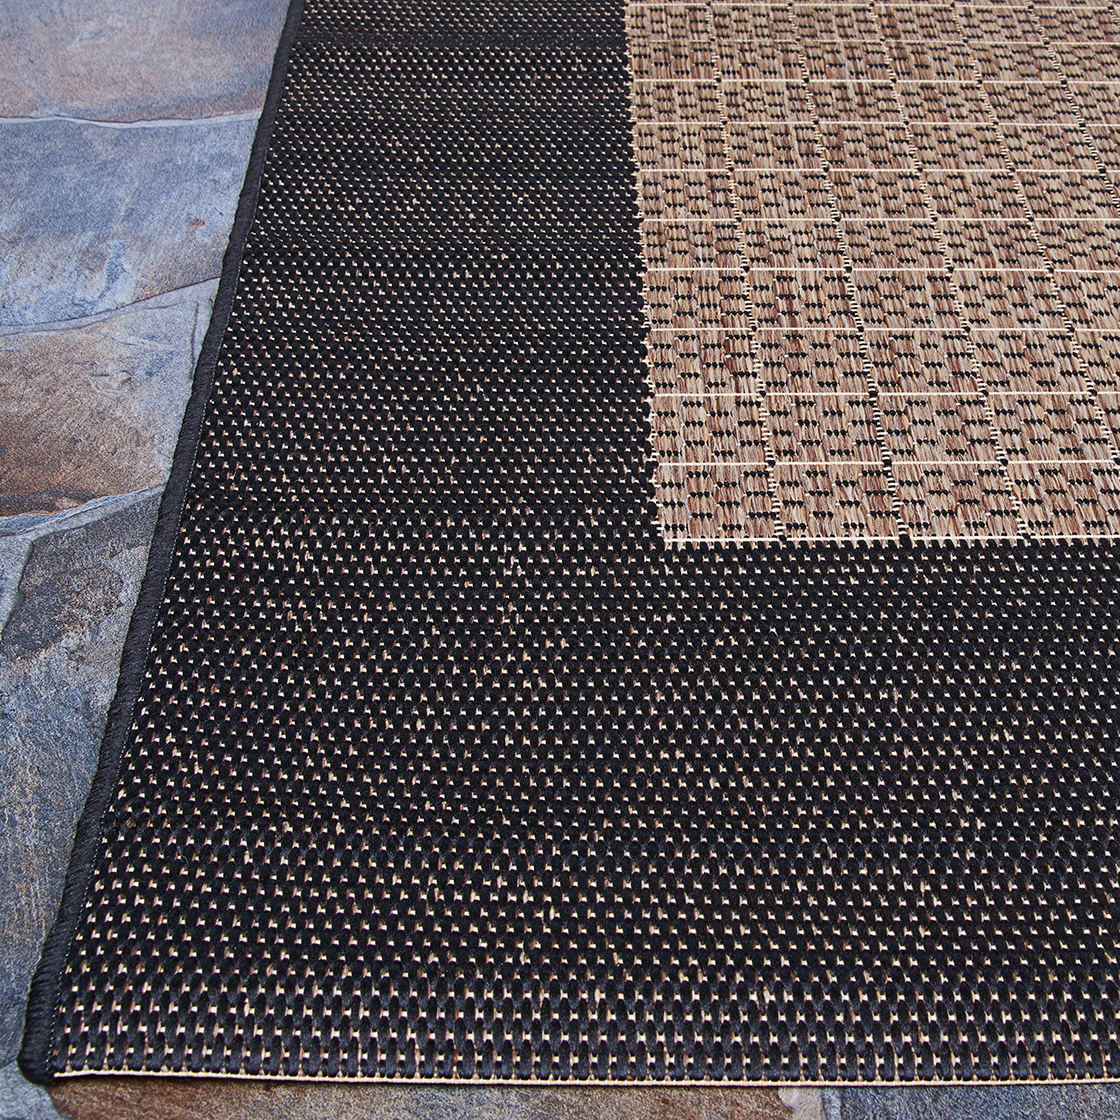 Couristan Recife Checkered Field Indoor / Outdoor Area Rug, Cocoa- Black, 2' x 3'7" - image 4 of 6